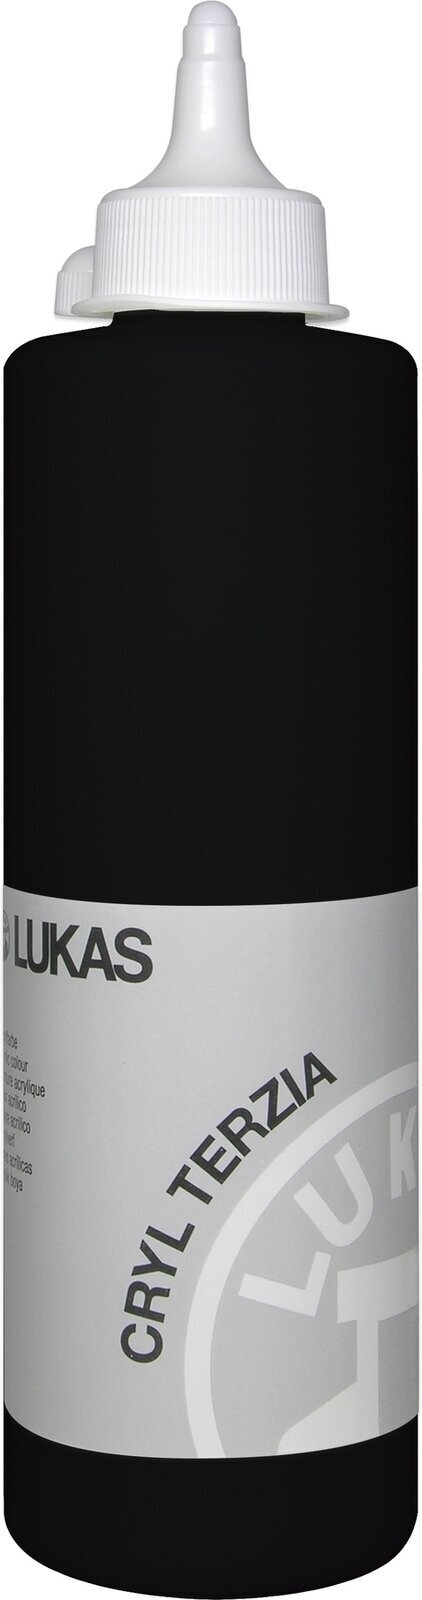 Farba akrylowa Lukas Cryl Terzia Acrylic Paint Plastic Bottle Farba akrylowa Ivory Black 500 ml 1 szt